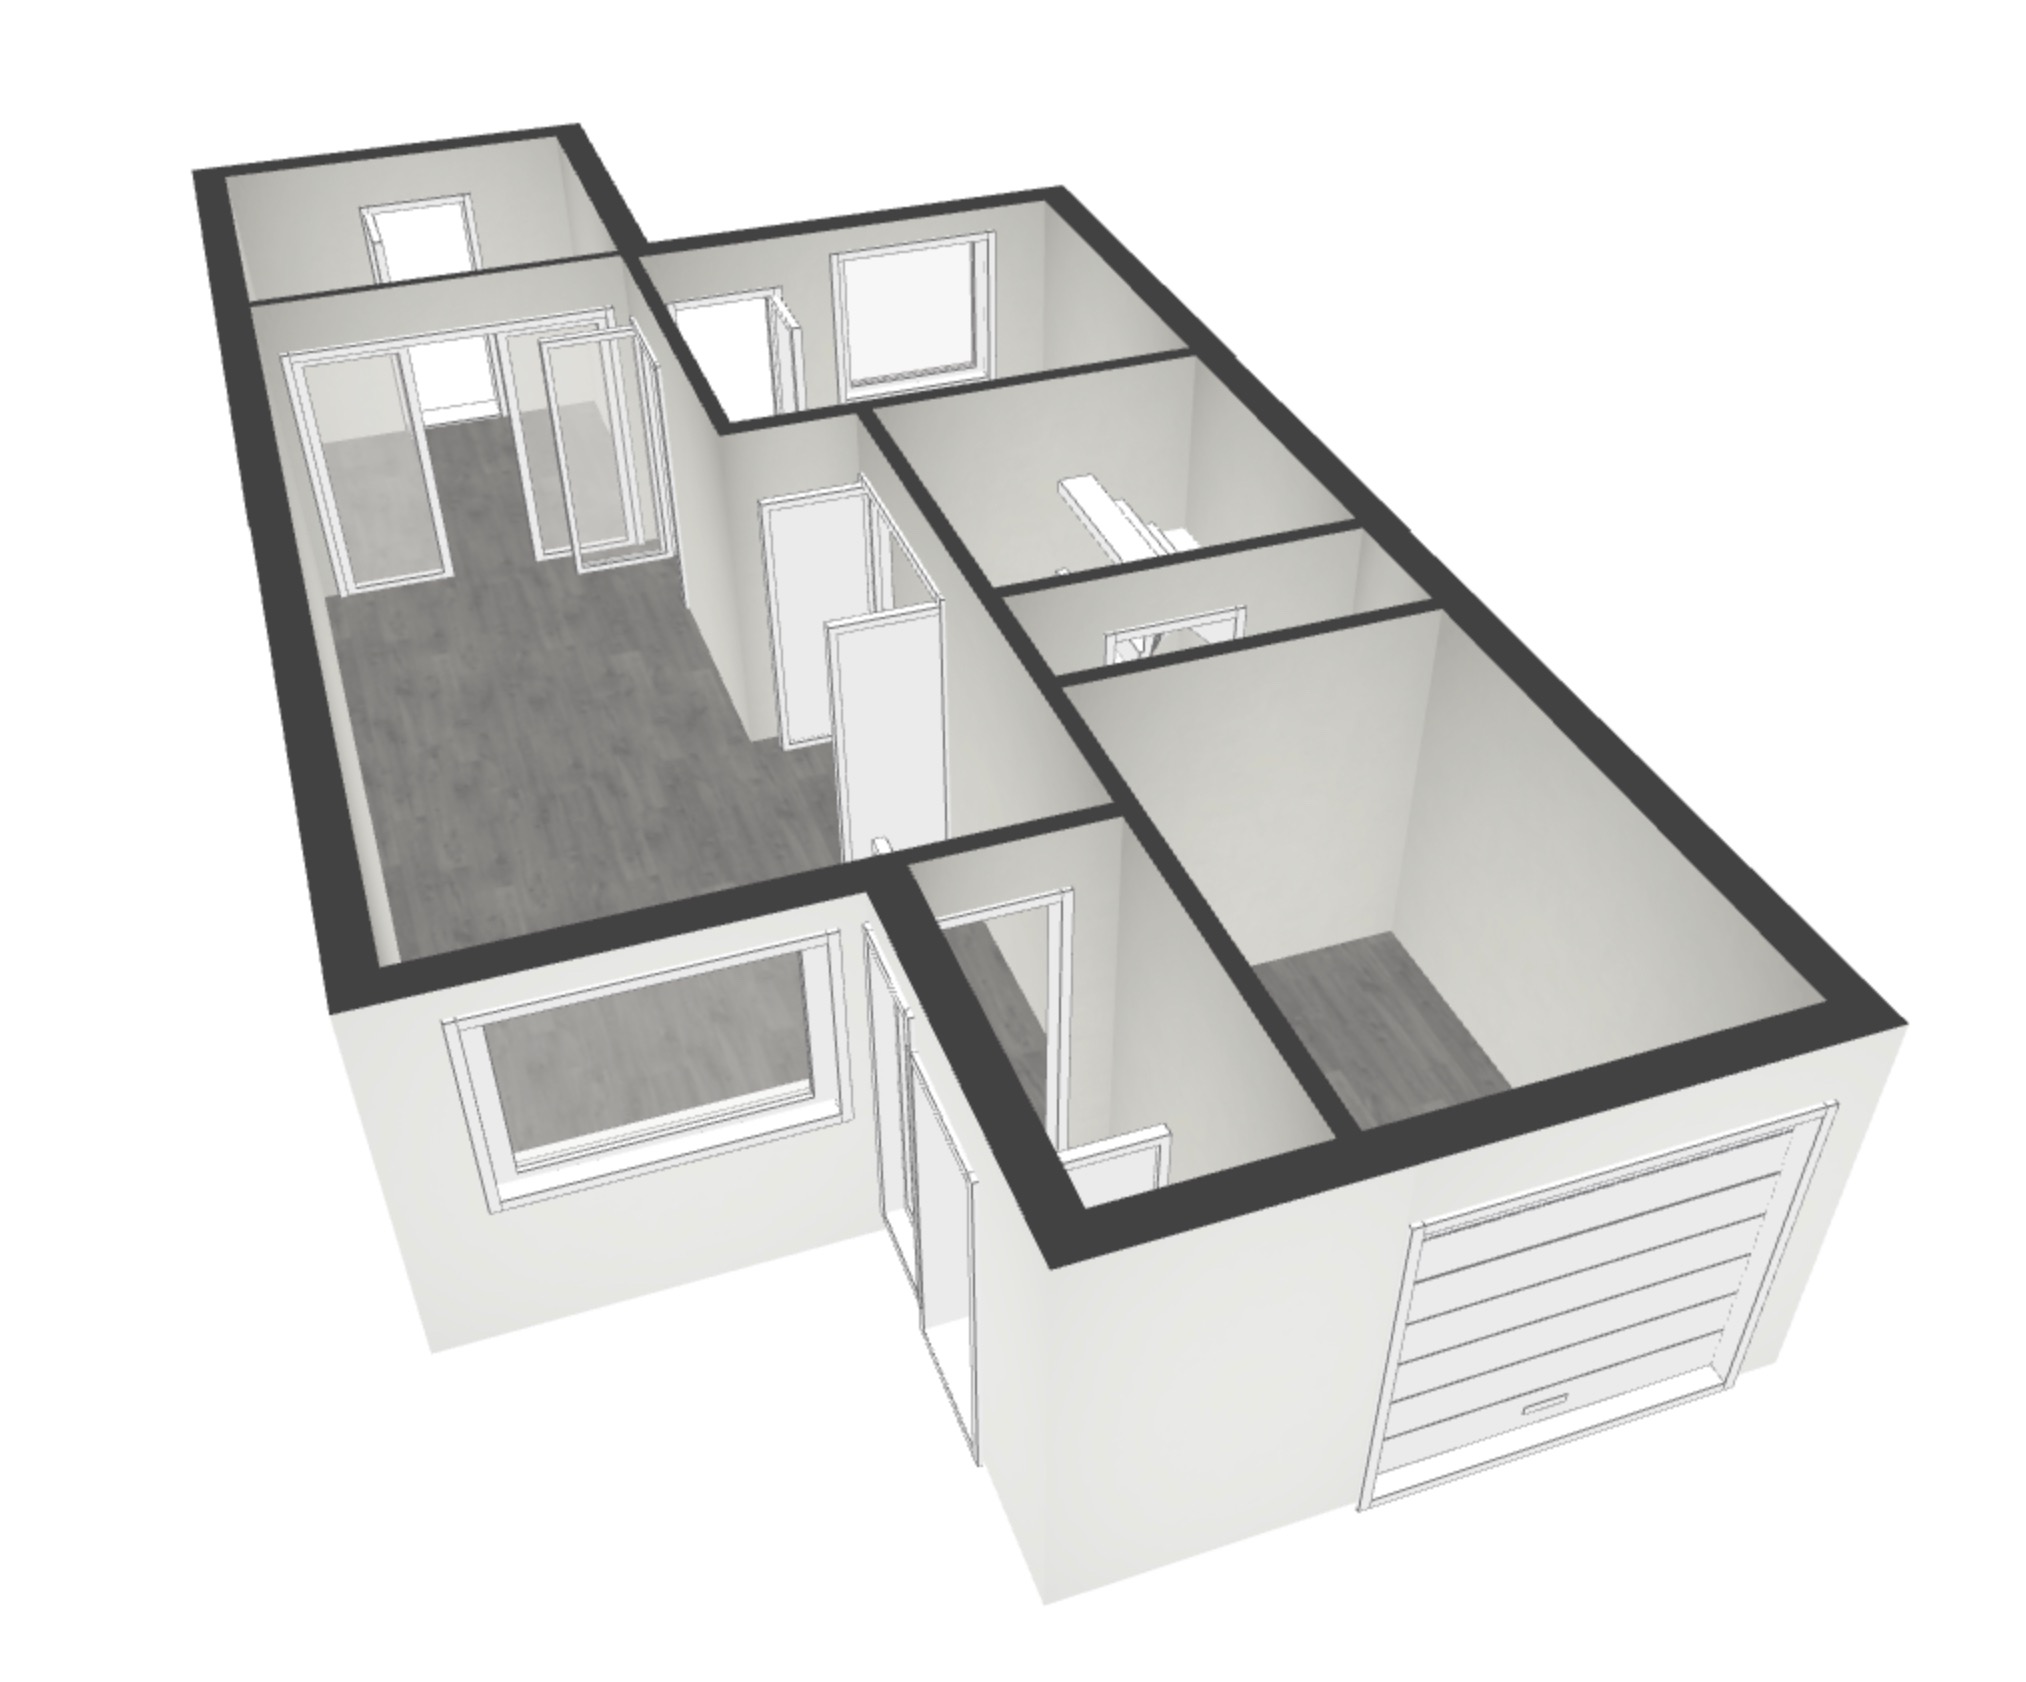 3 bed terraced house for sale in Ivel Road, Stevenage - Property Floorplan